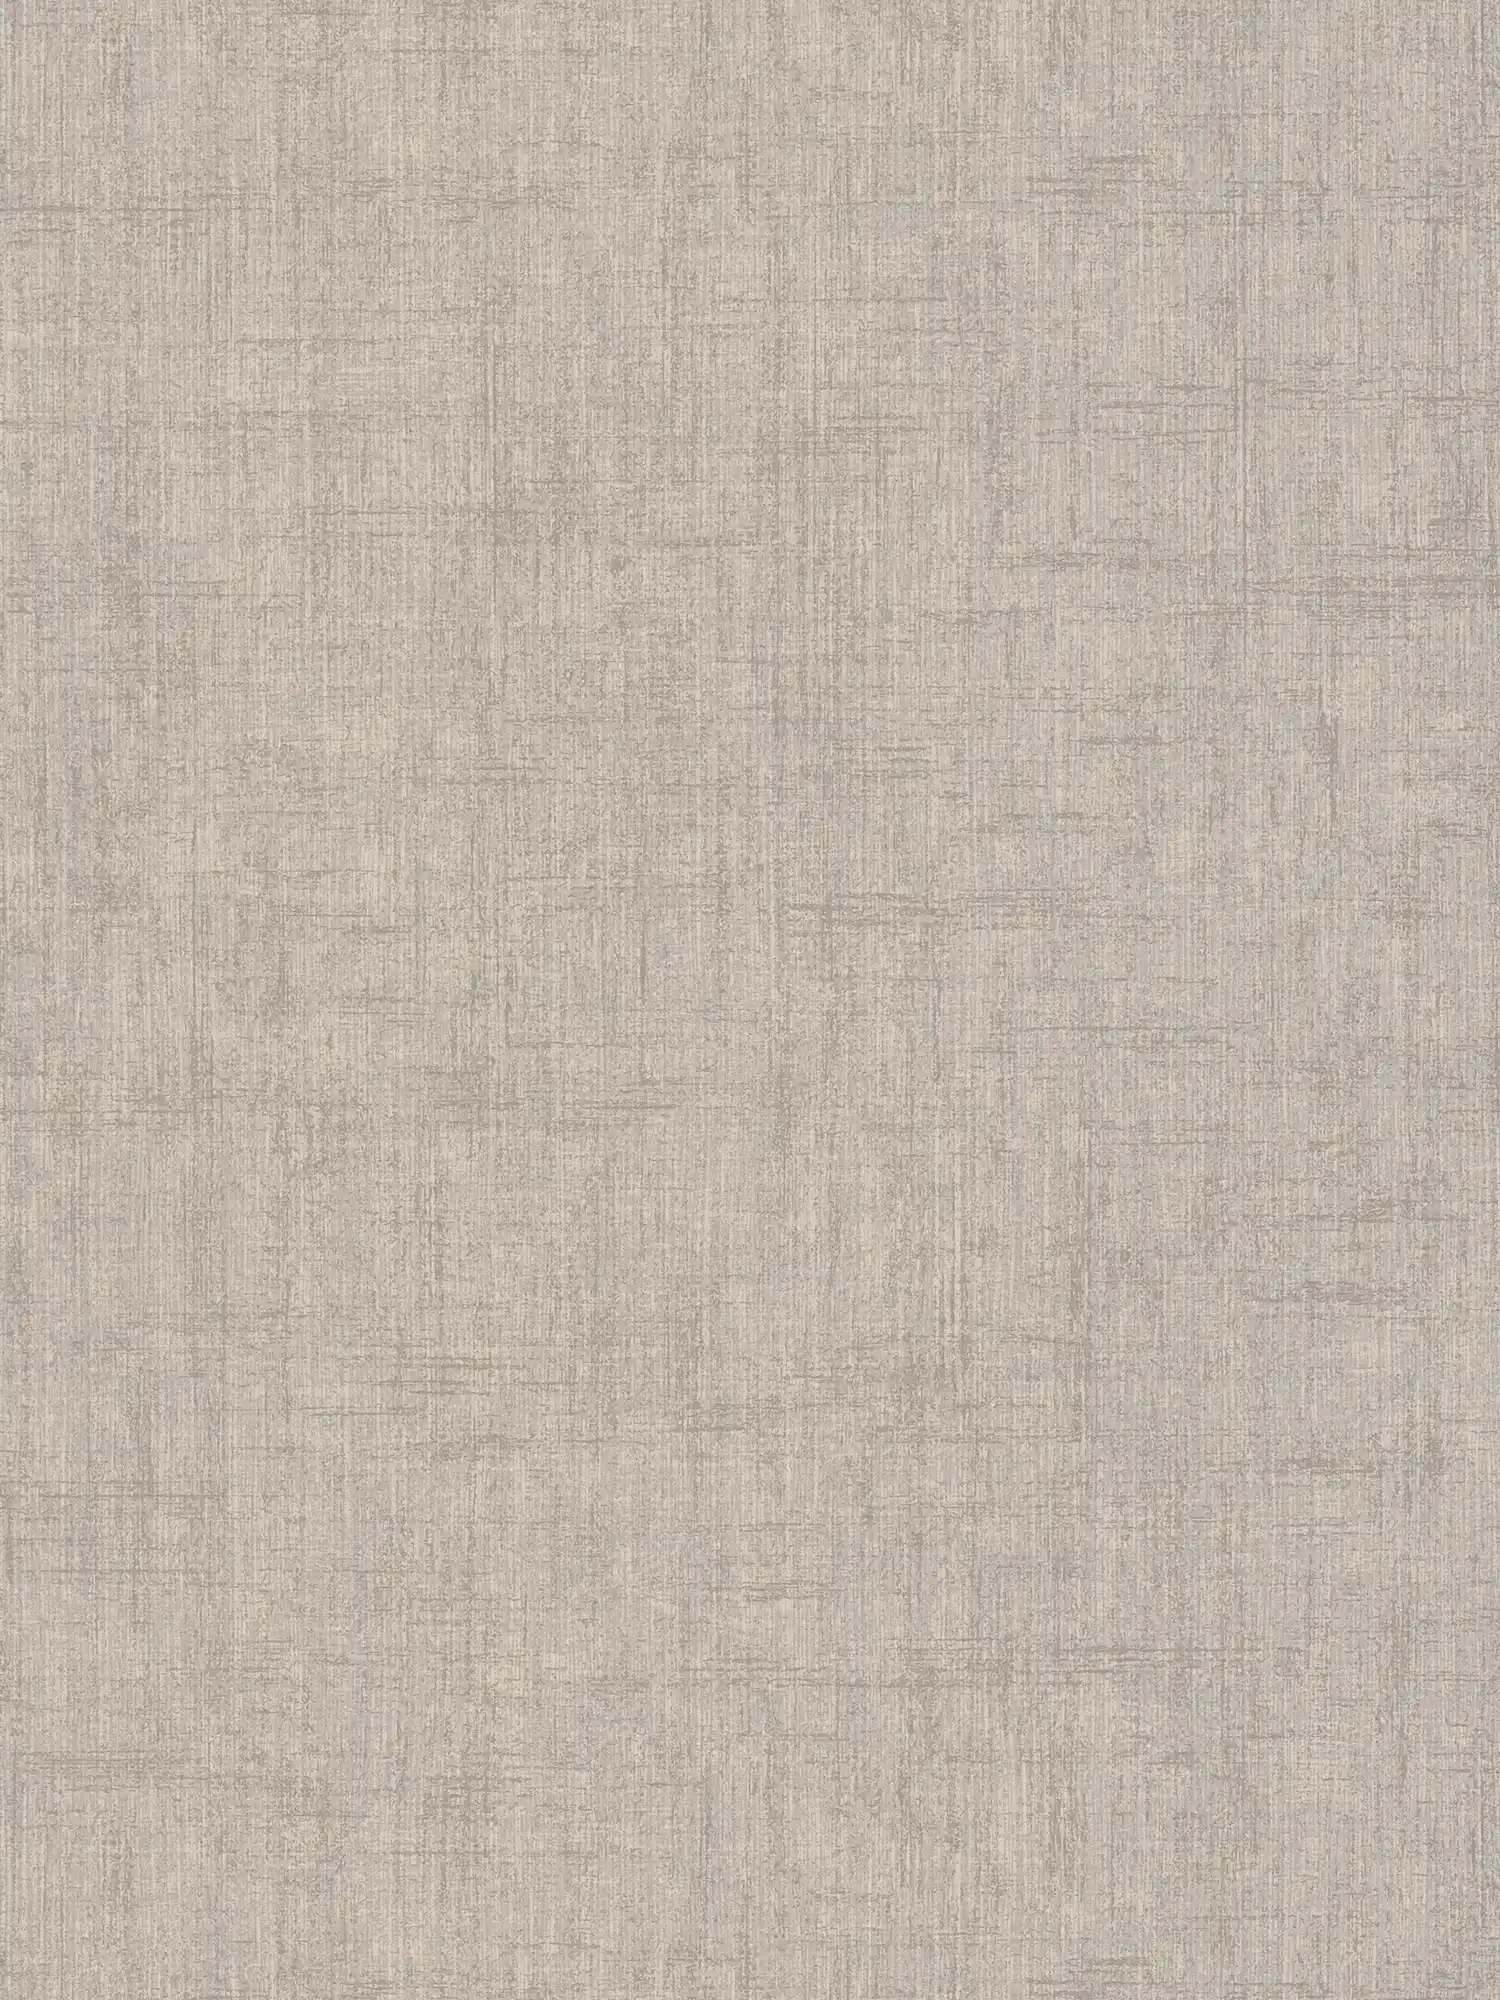 Greige papier peint, aspect lin grossier - gris, beige
